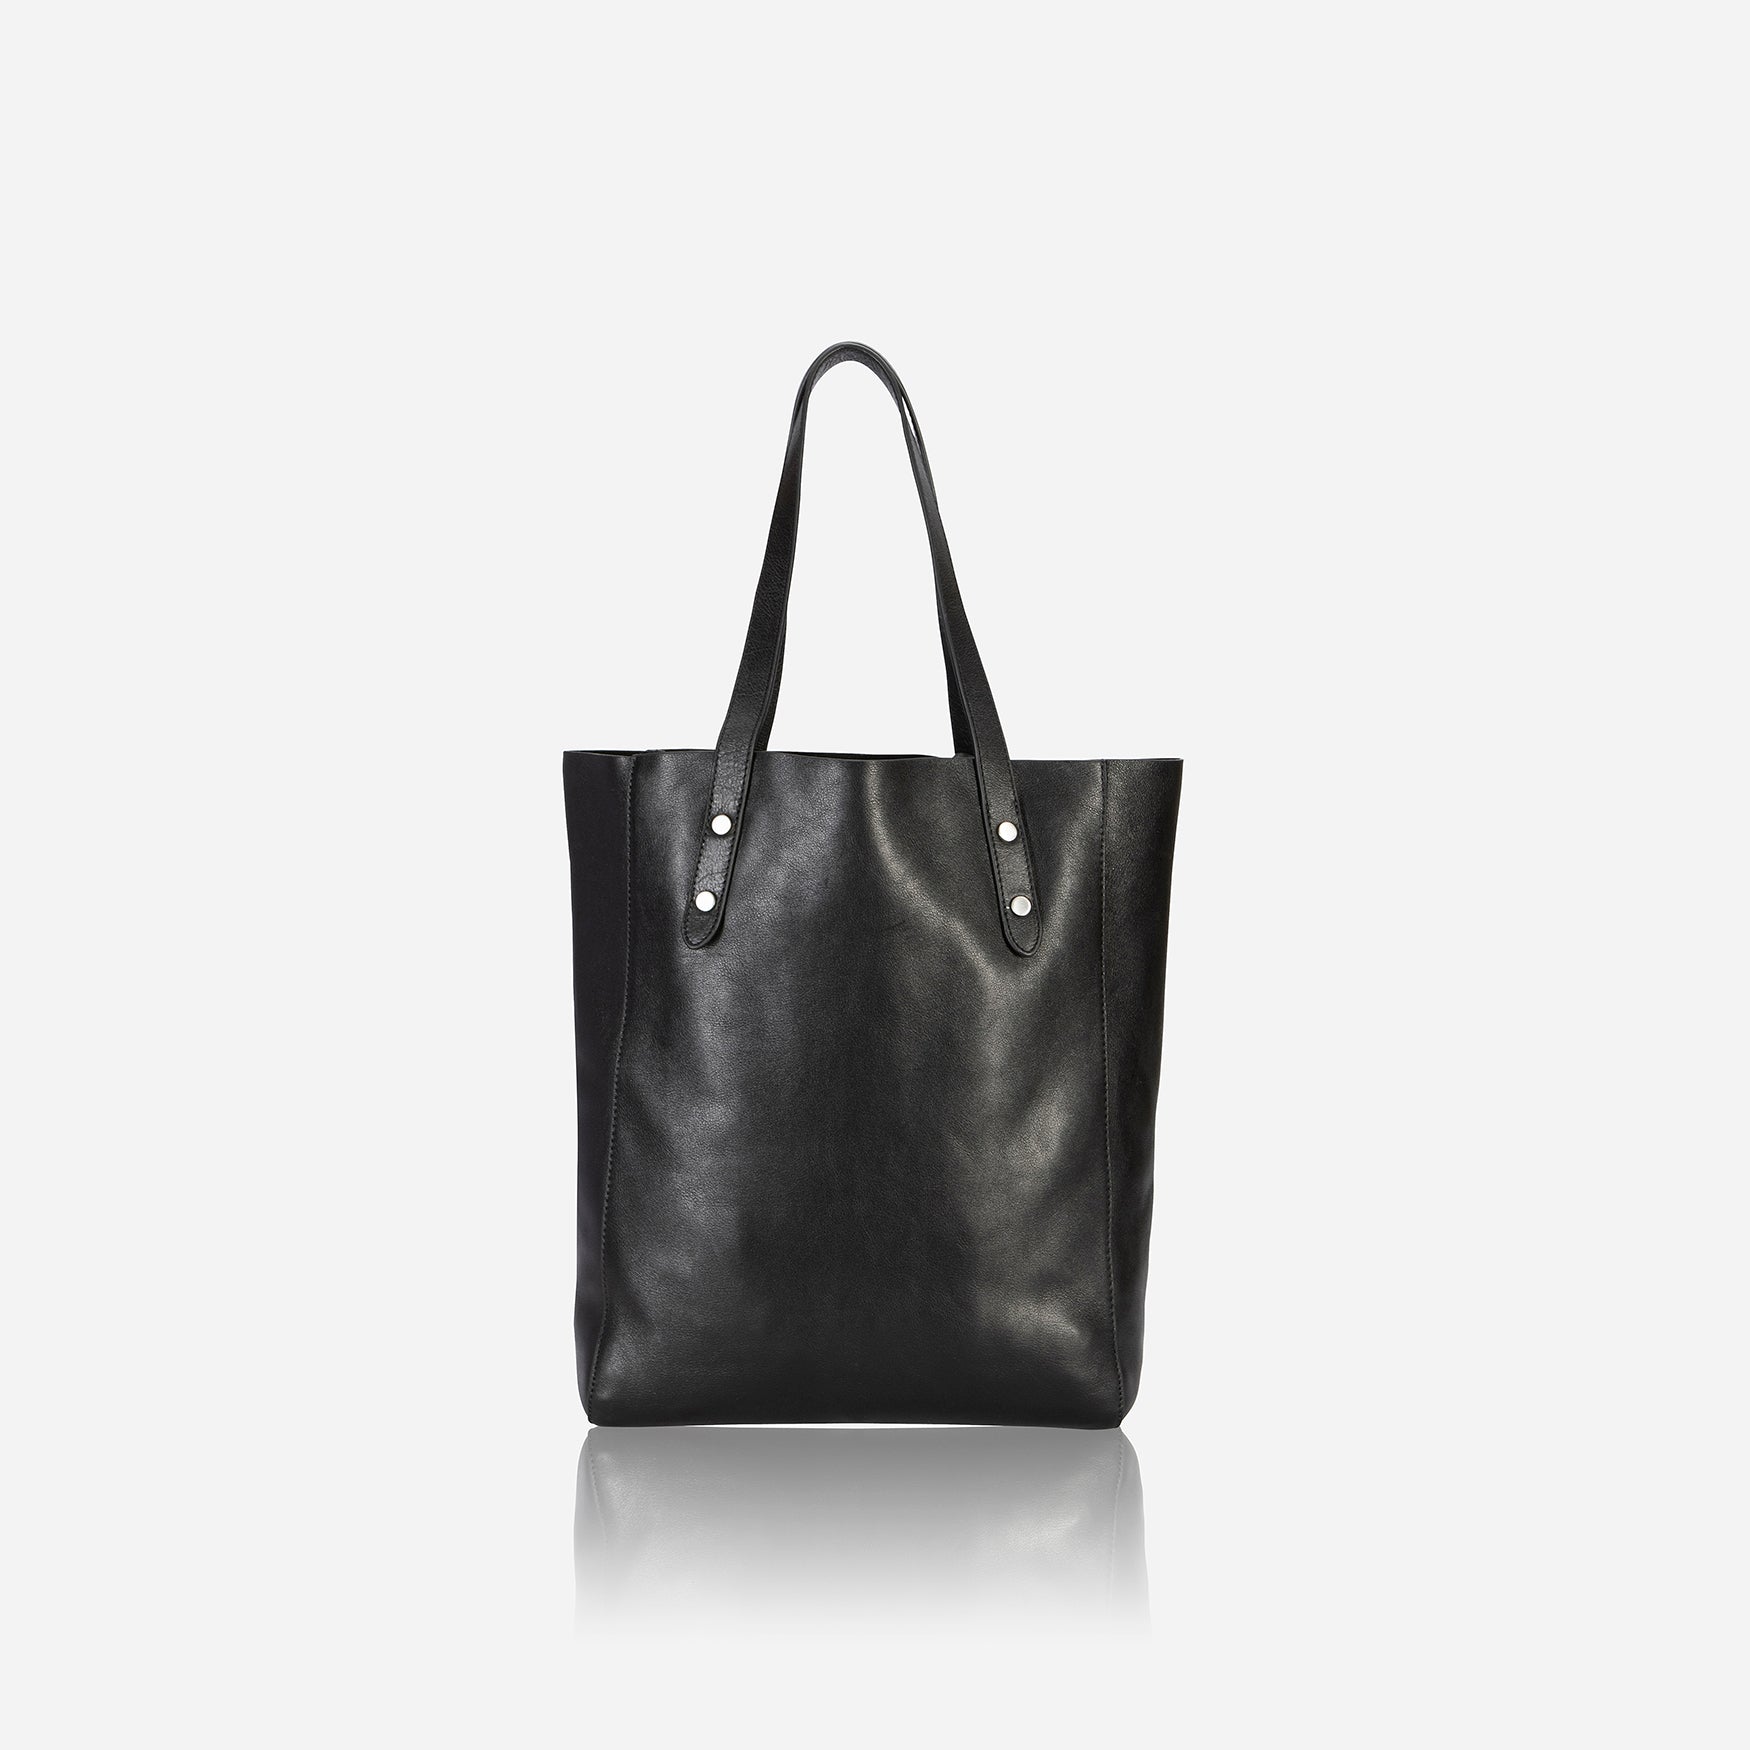 Black Tote Shoulder Bag 2 in 1 Ladies Large Faux Leather Top Handle Handbag